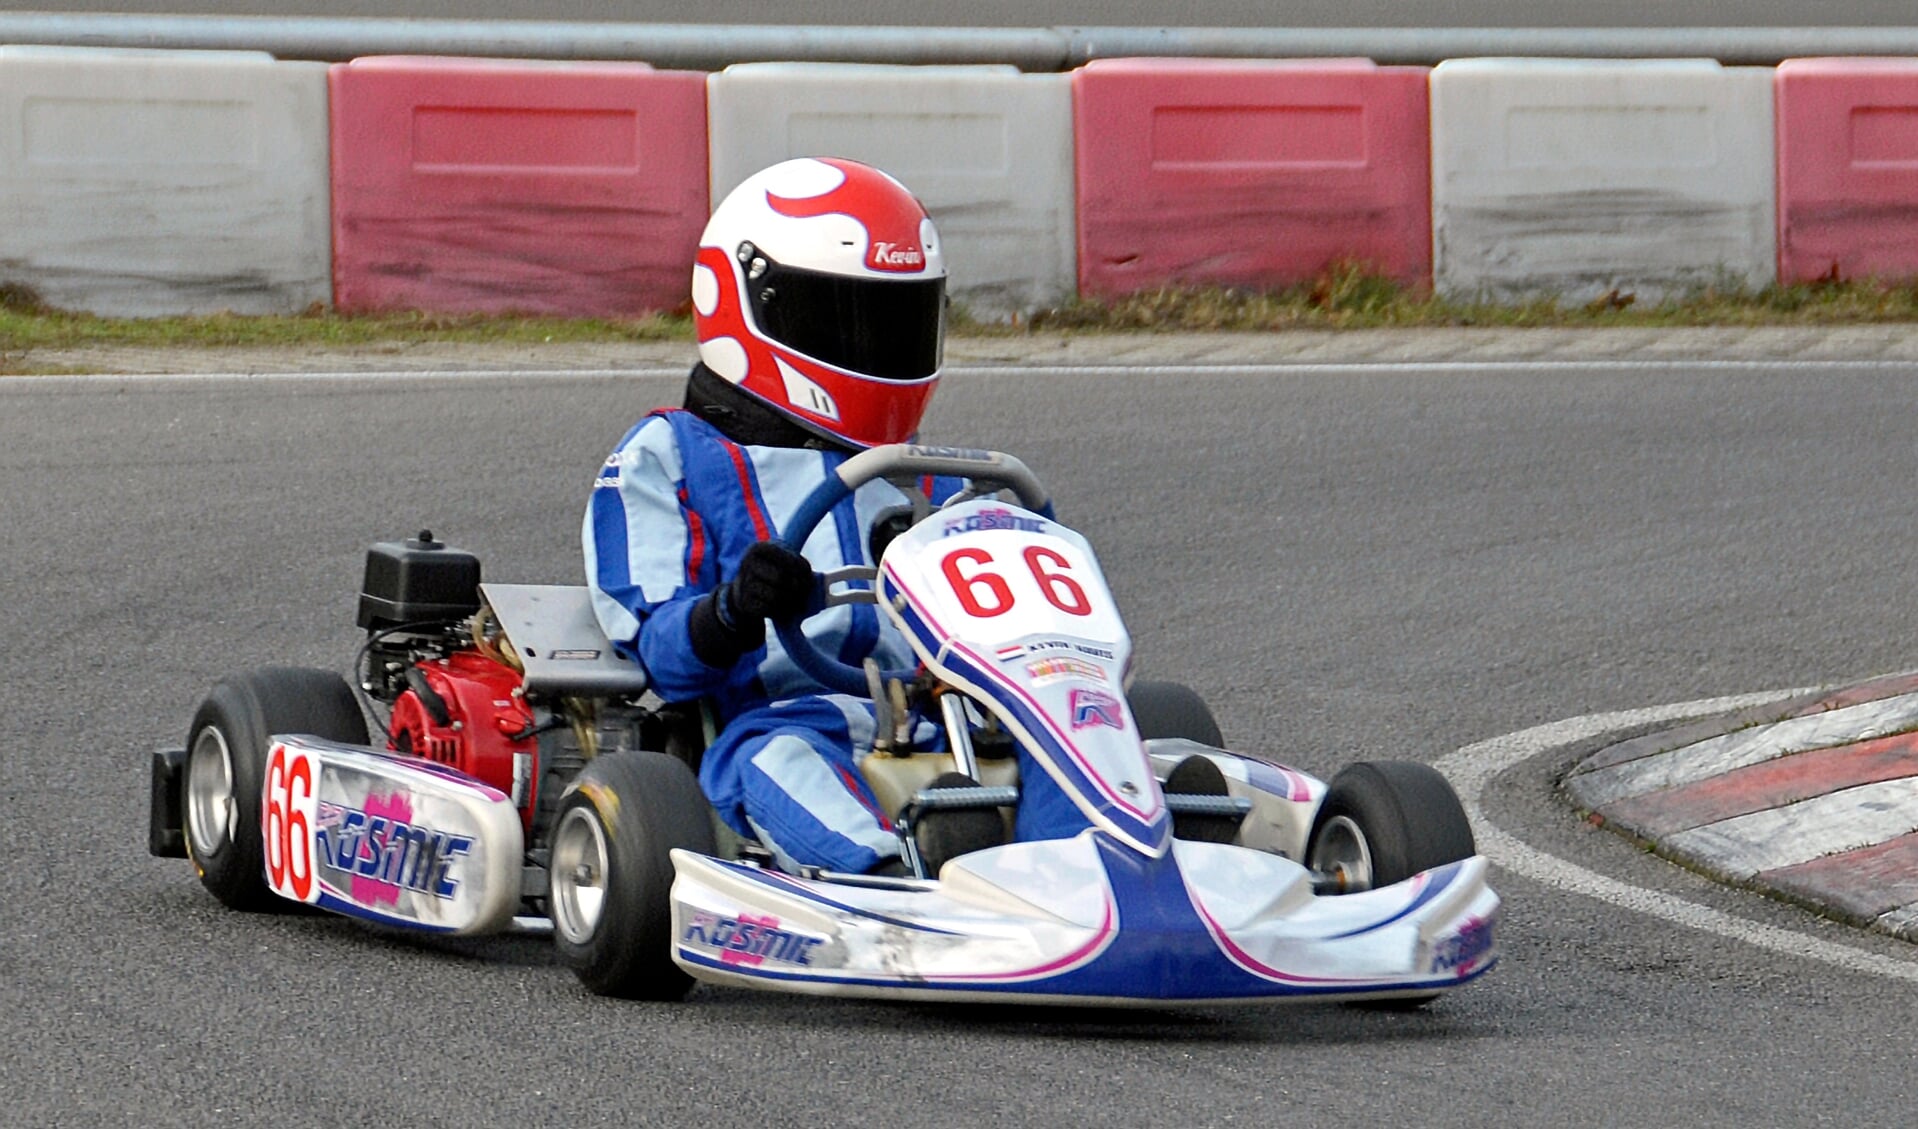 Kevin Navis Nederlands Kampioen karten in een Honda Cadet 160 cc klasse. Foto: Jack Amels Fotografie